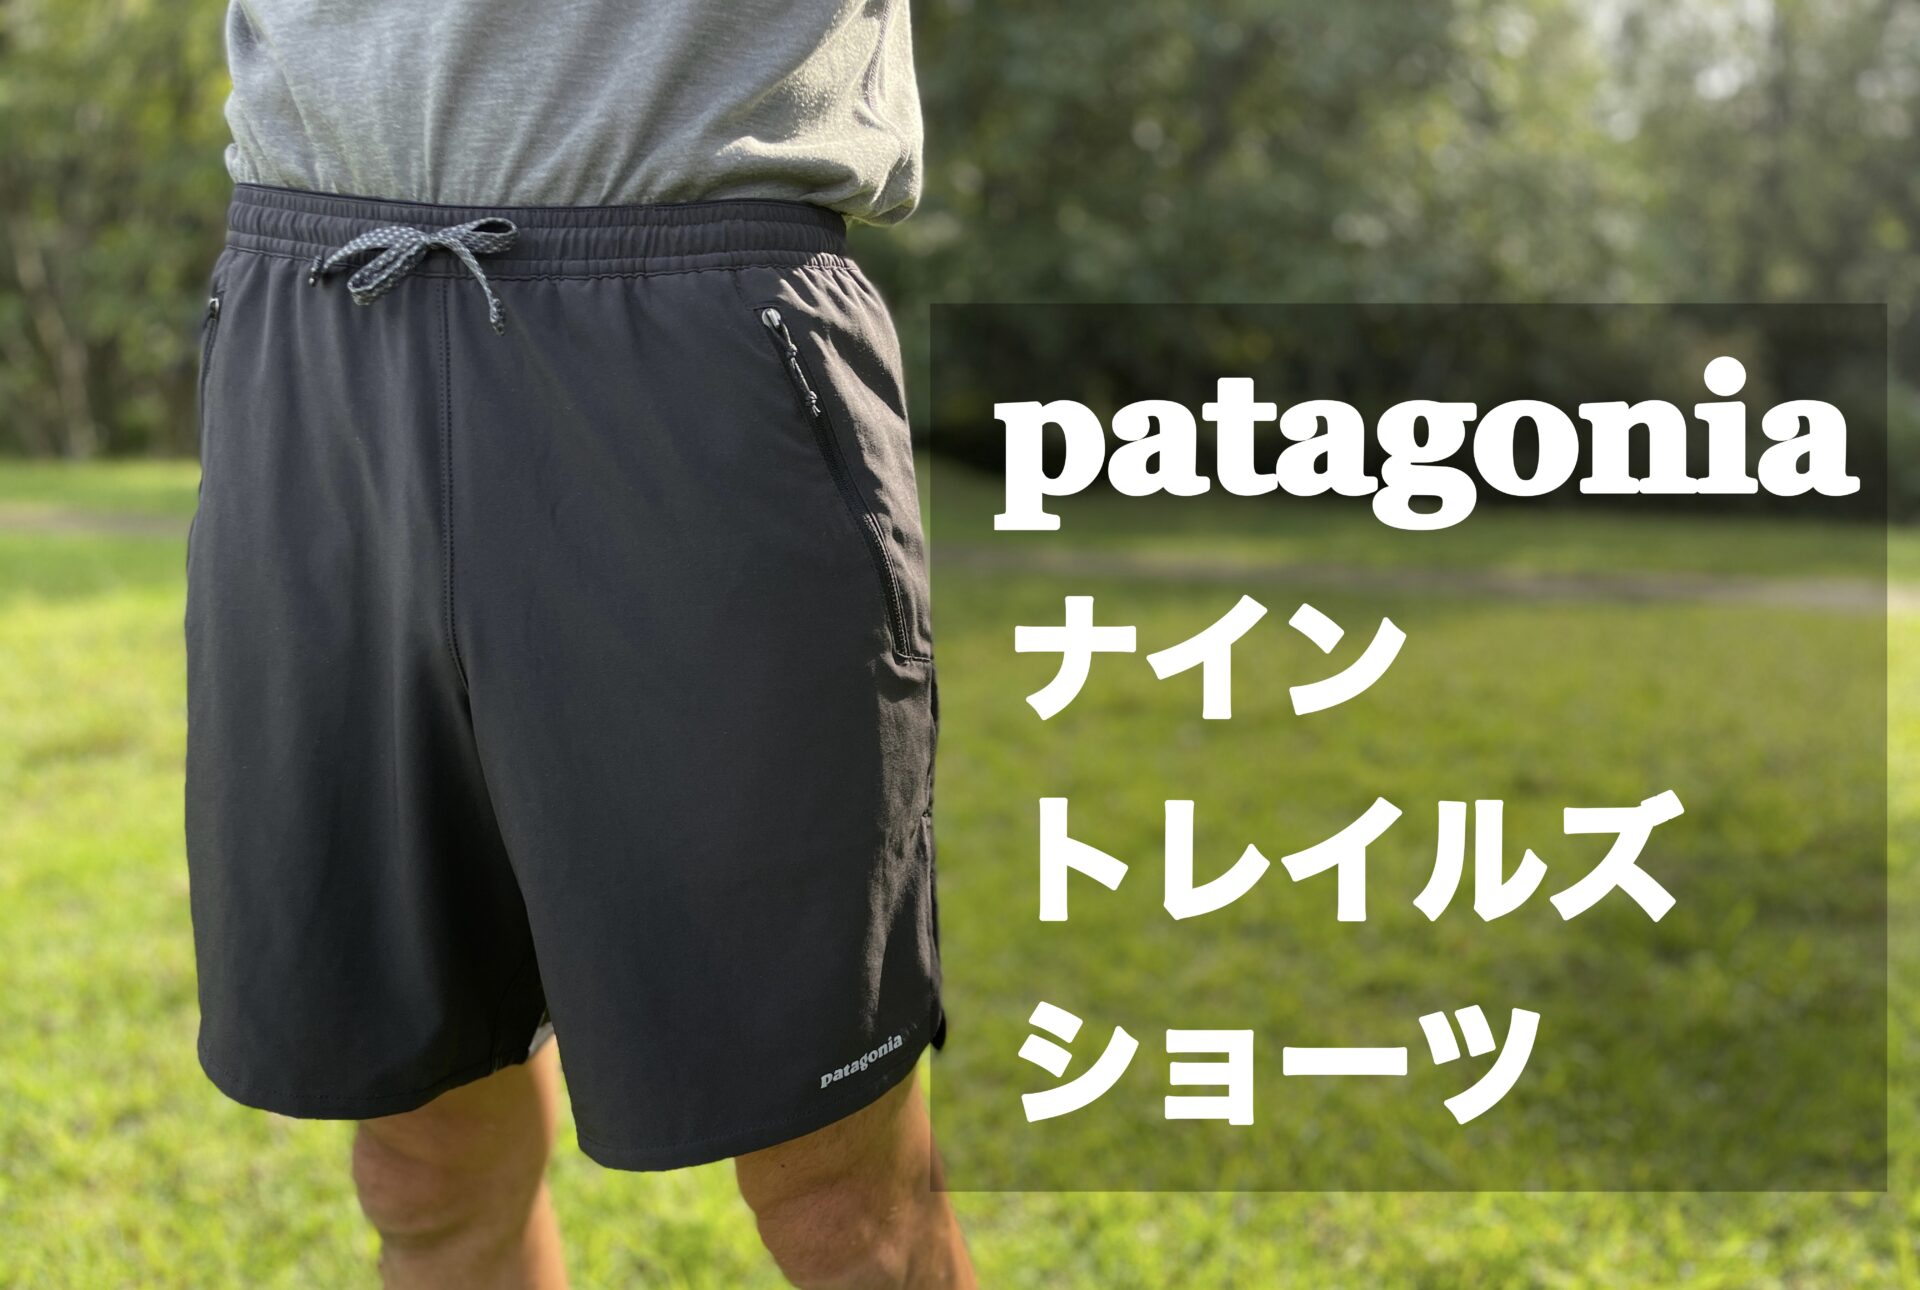 Patagonia メンズ・ナイン・トレイルズ・ショーツ ８インチ - ショート 